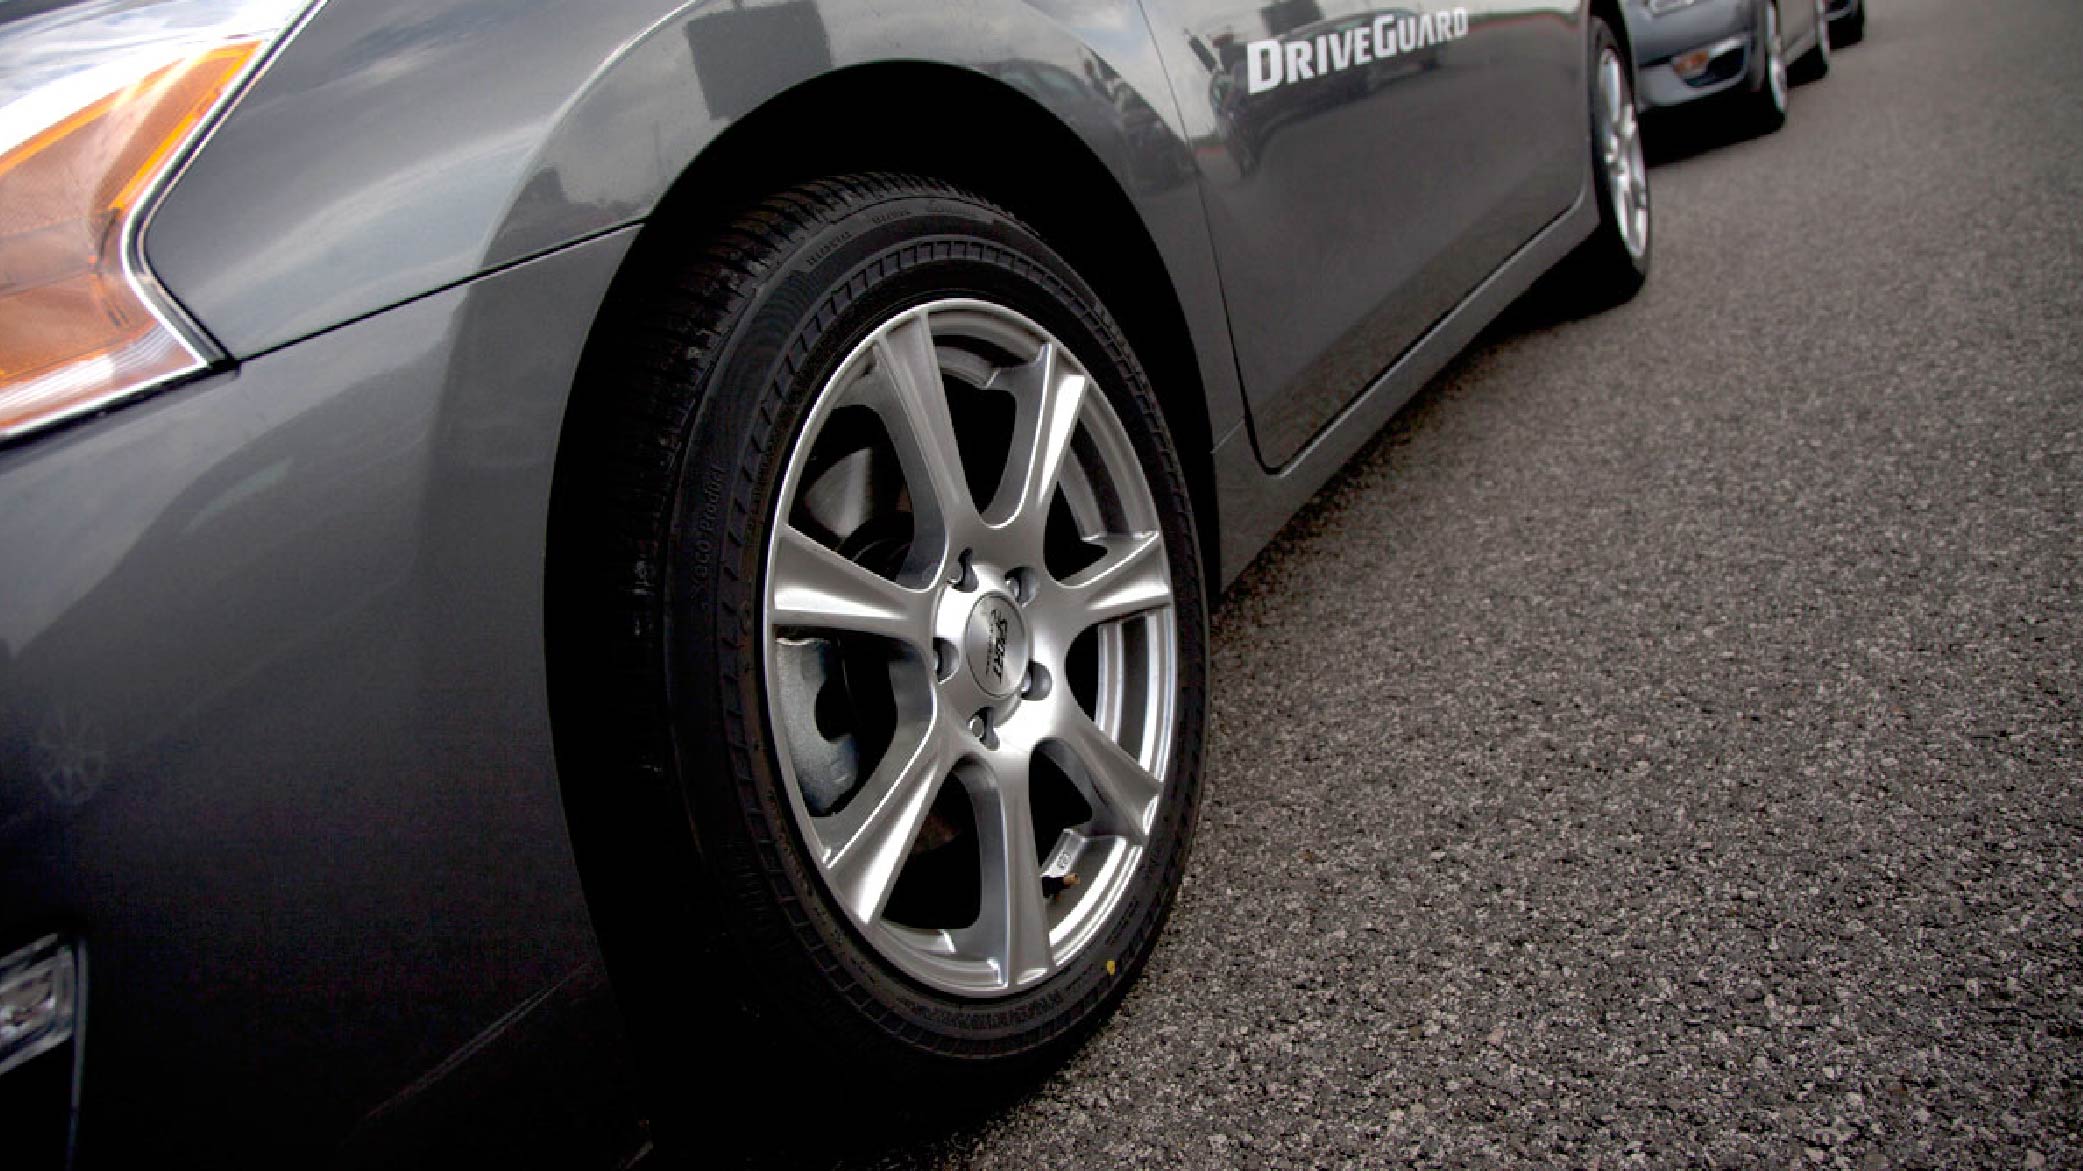 Bridgestone DriveGuard Tire